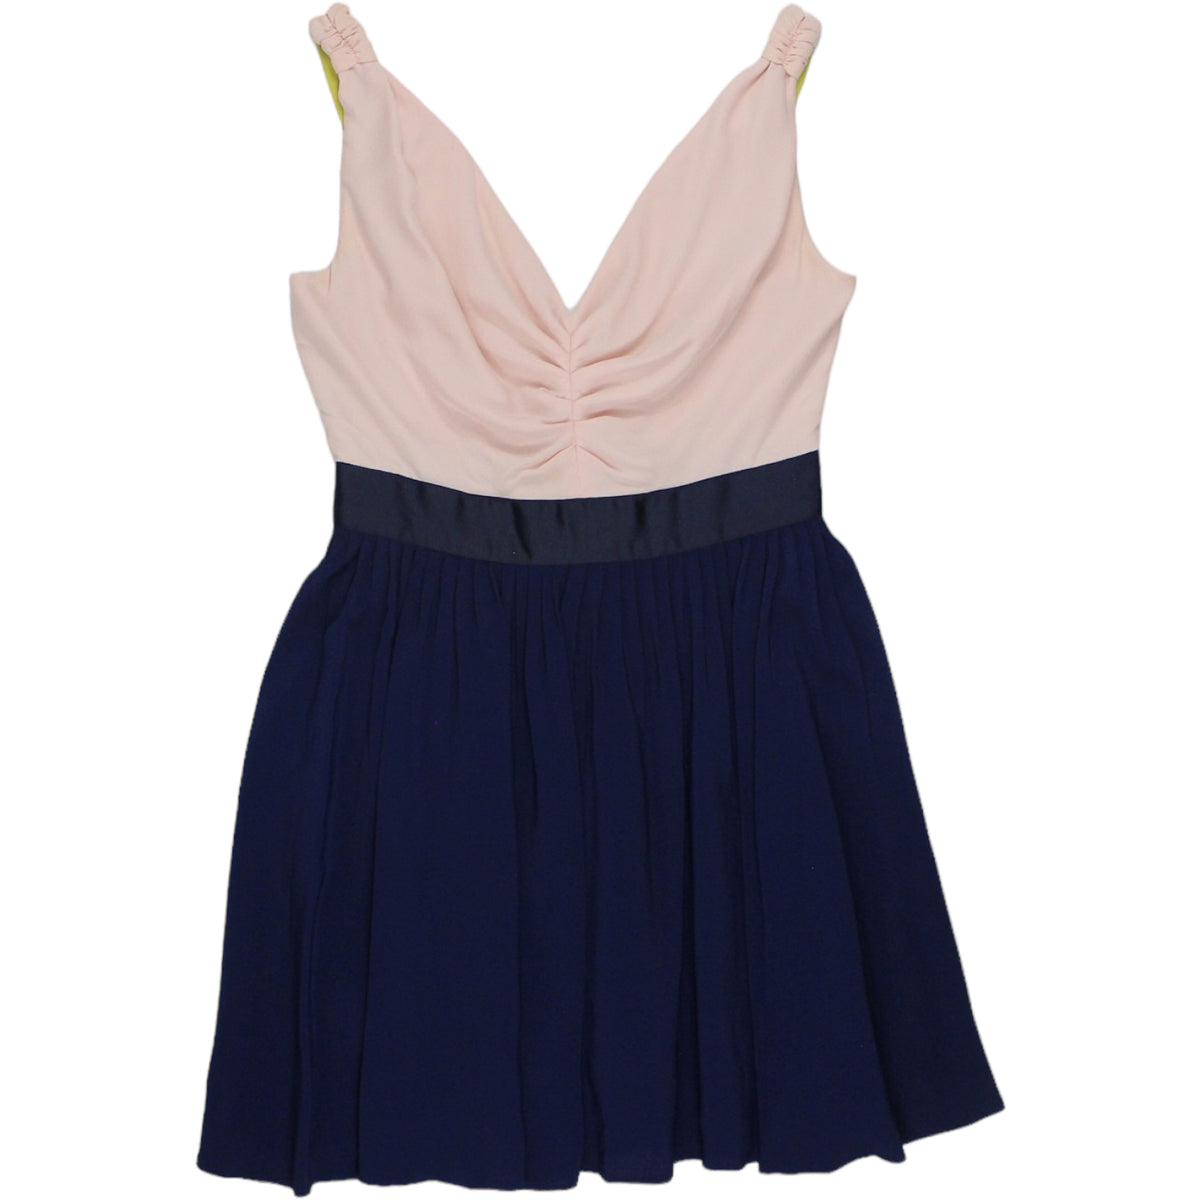 Reiss Pink/Navy Silk Bodice Dress